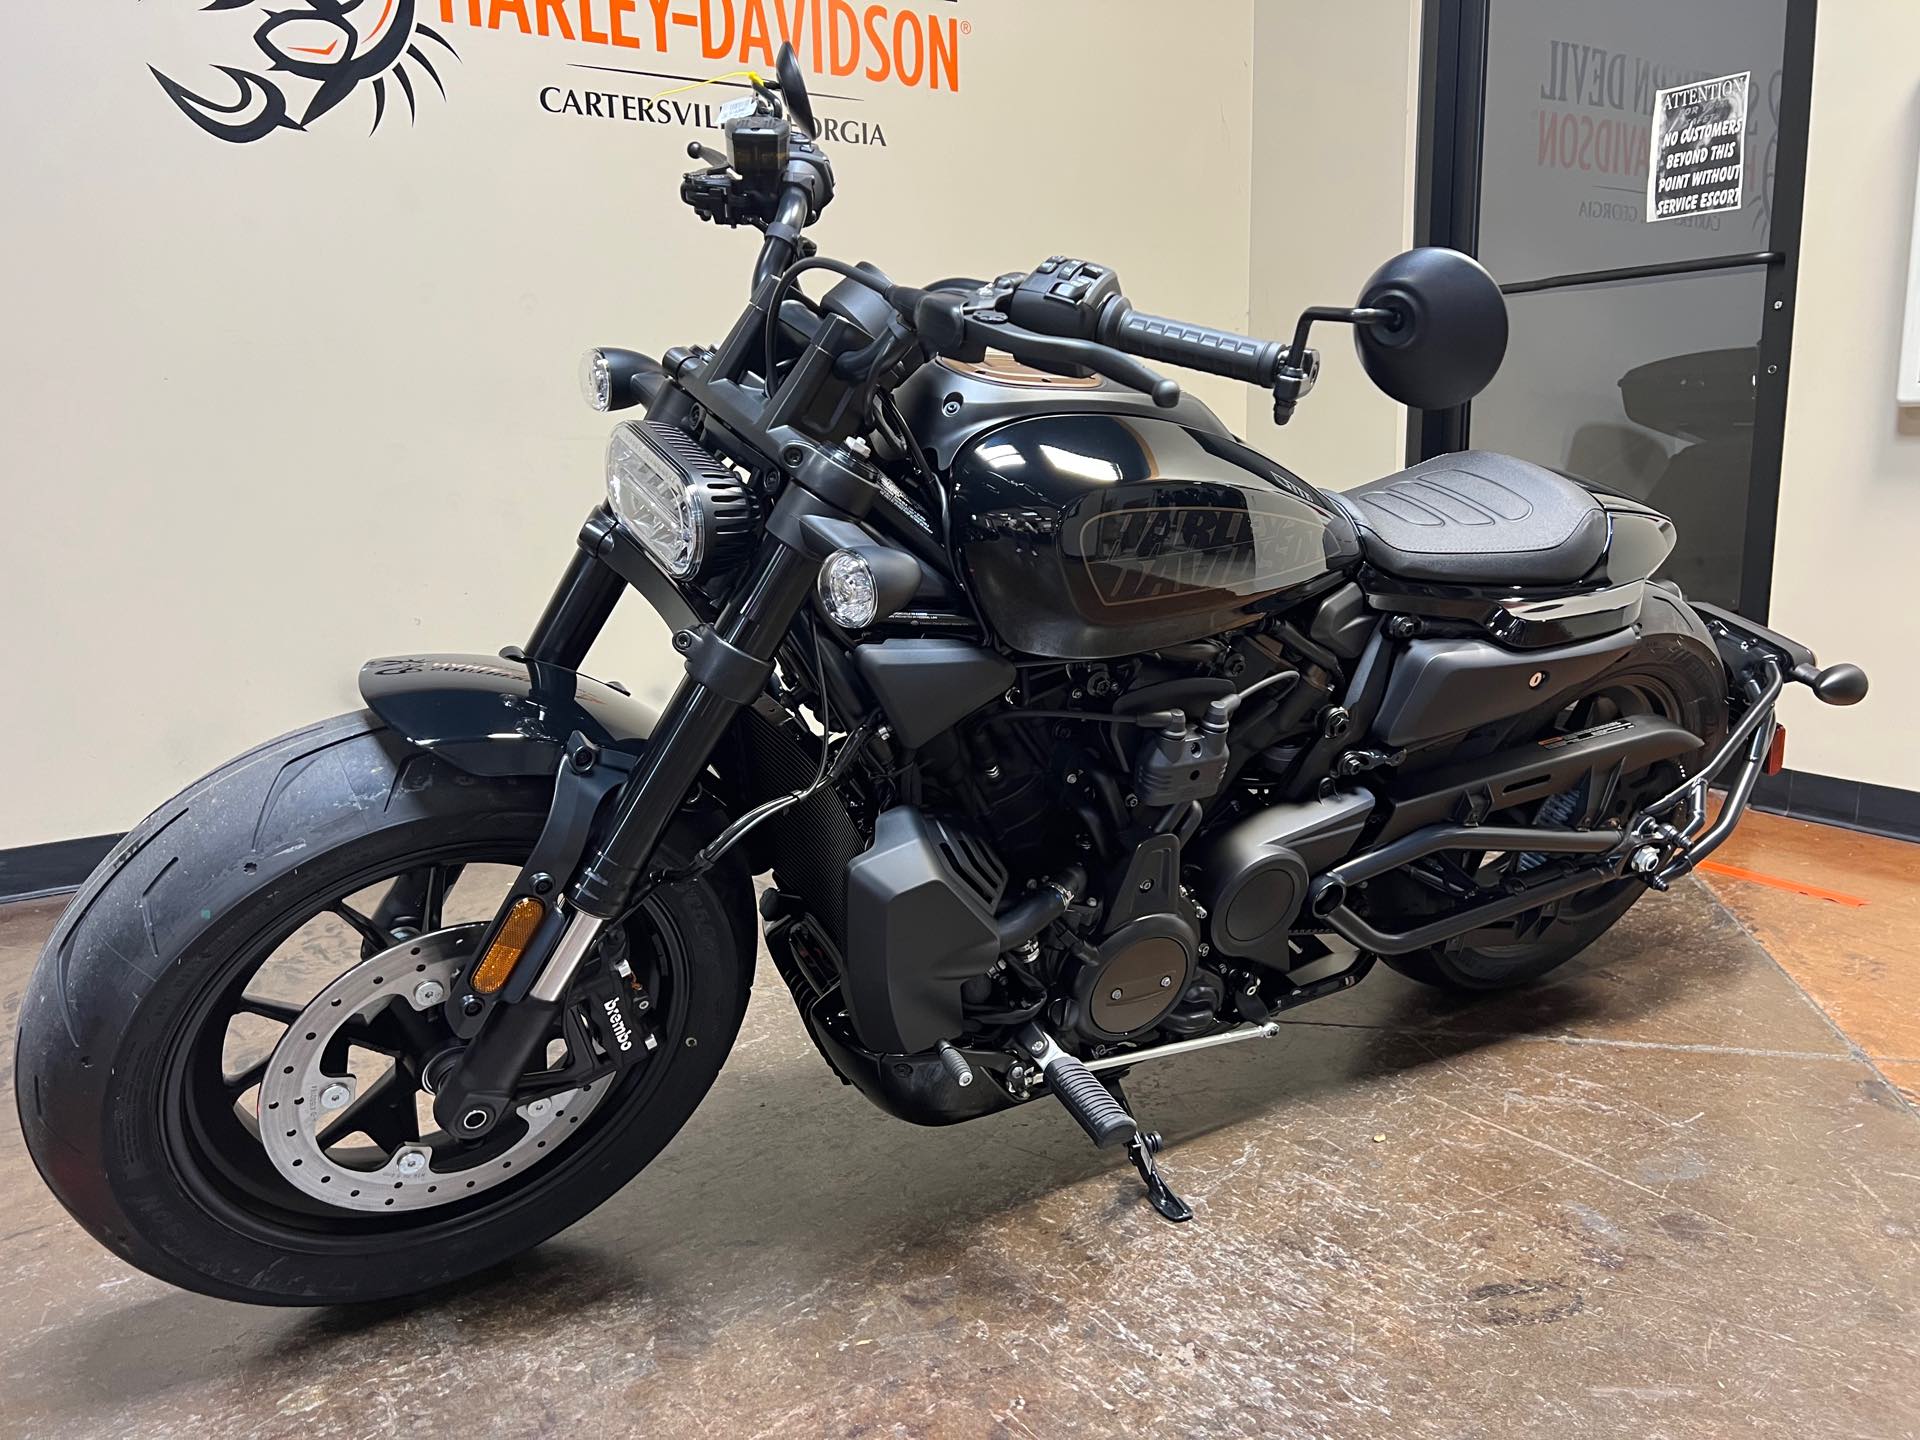 2023 Harley-Davidson Sportster S at Southern Devil Harley-Davidson